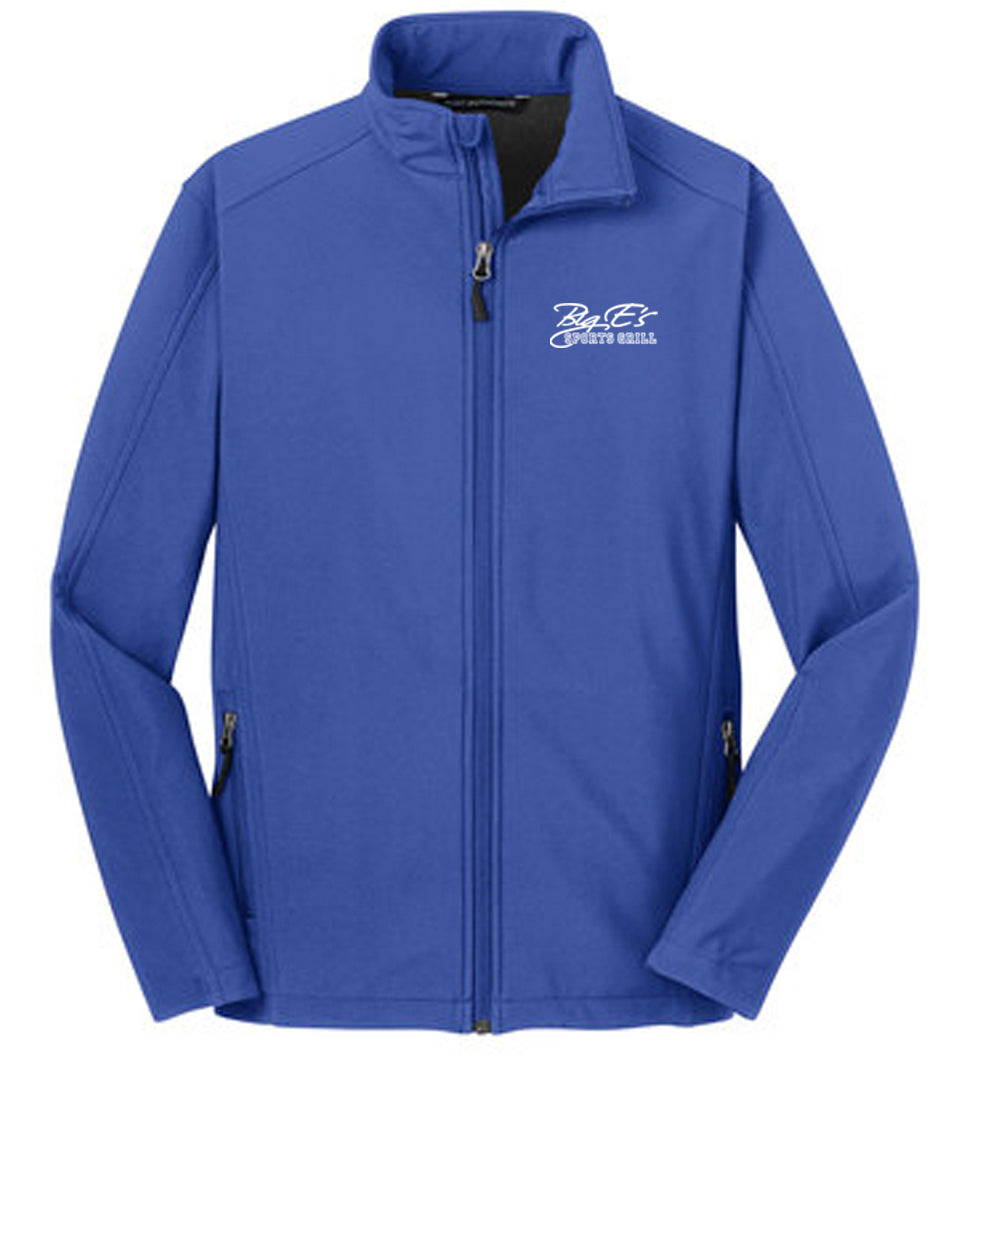 Women's Big E's Port Authority® Core Soft Shell Jacket